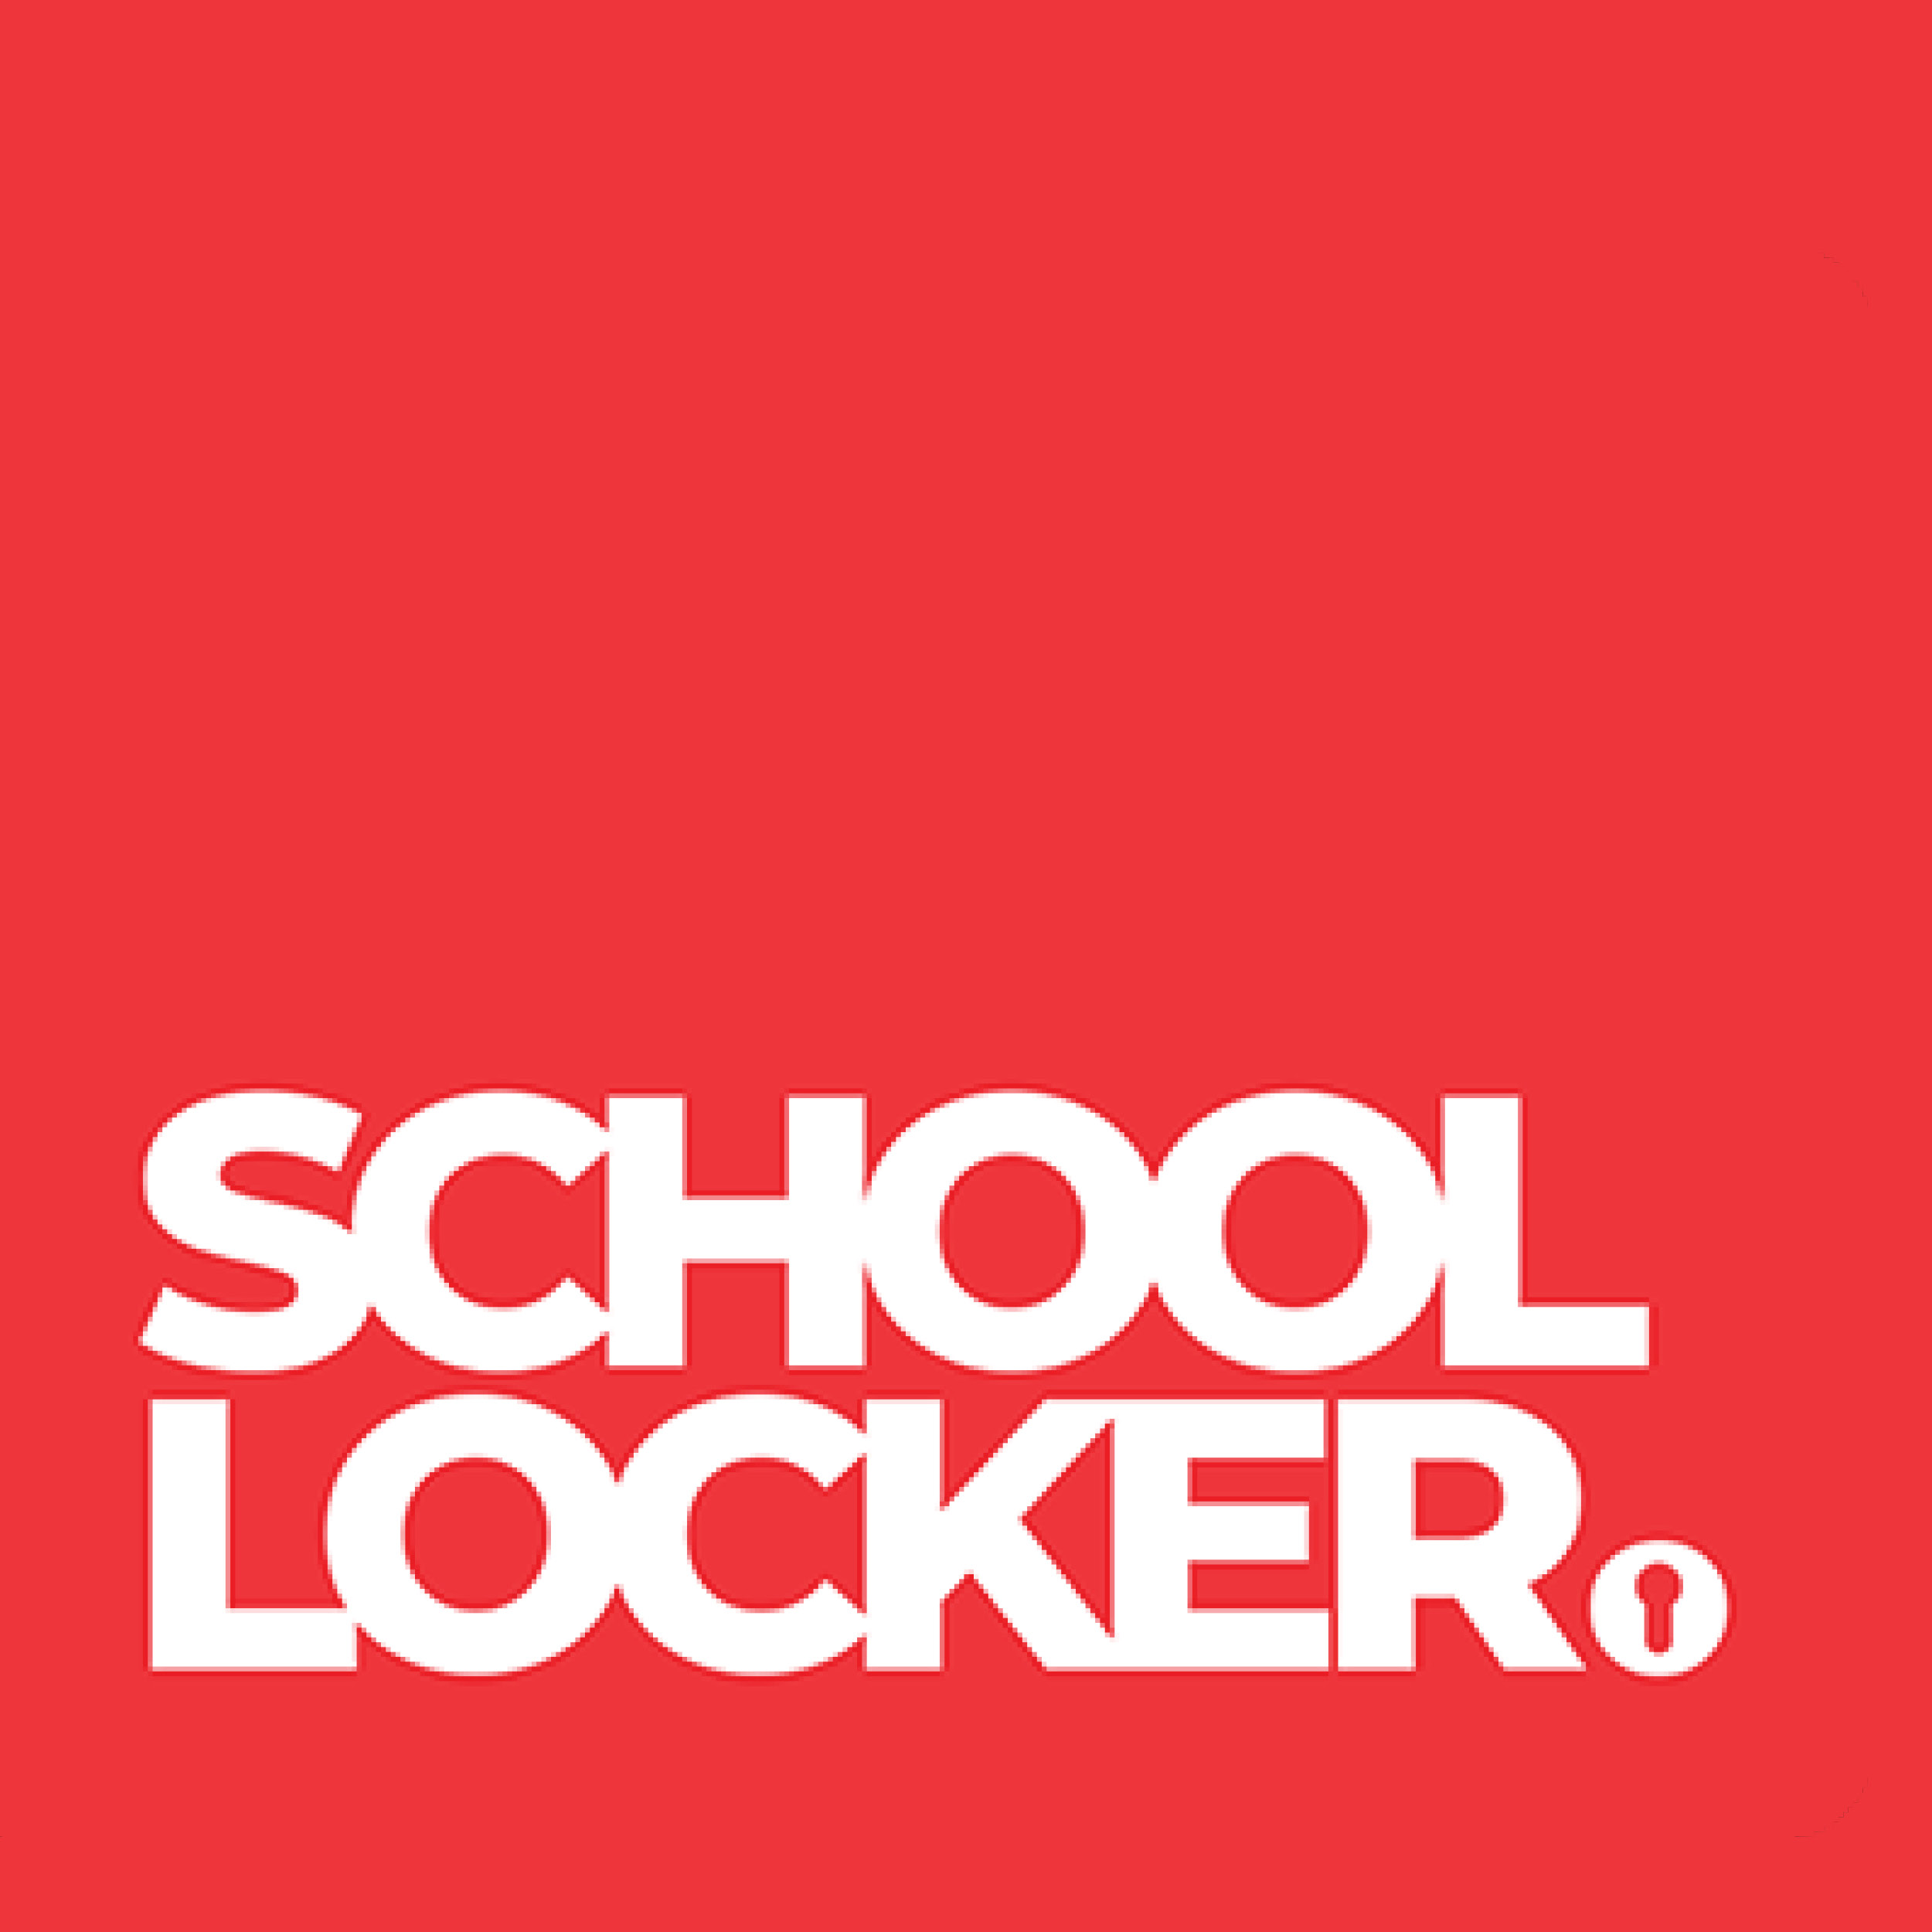 The School Locker